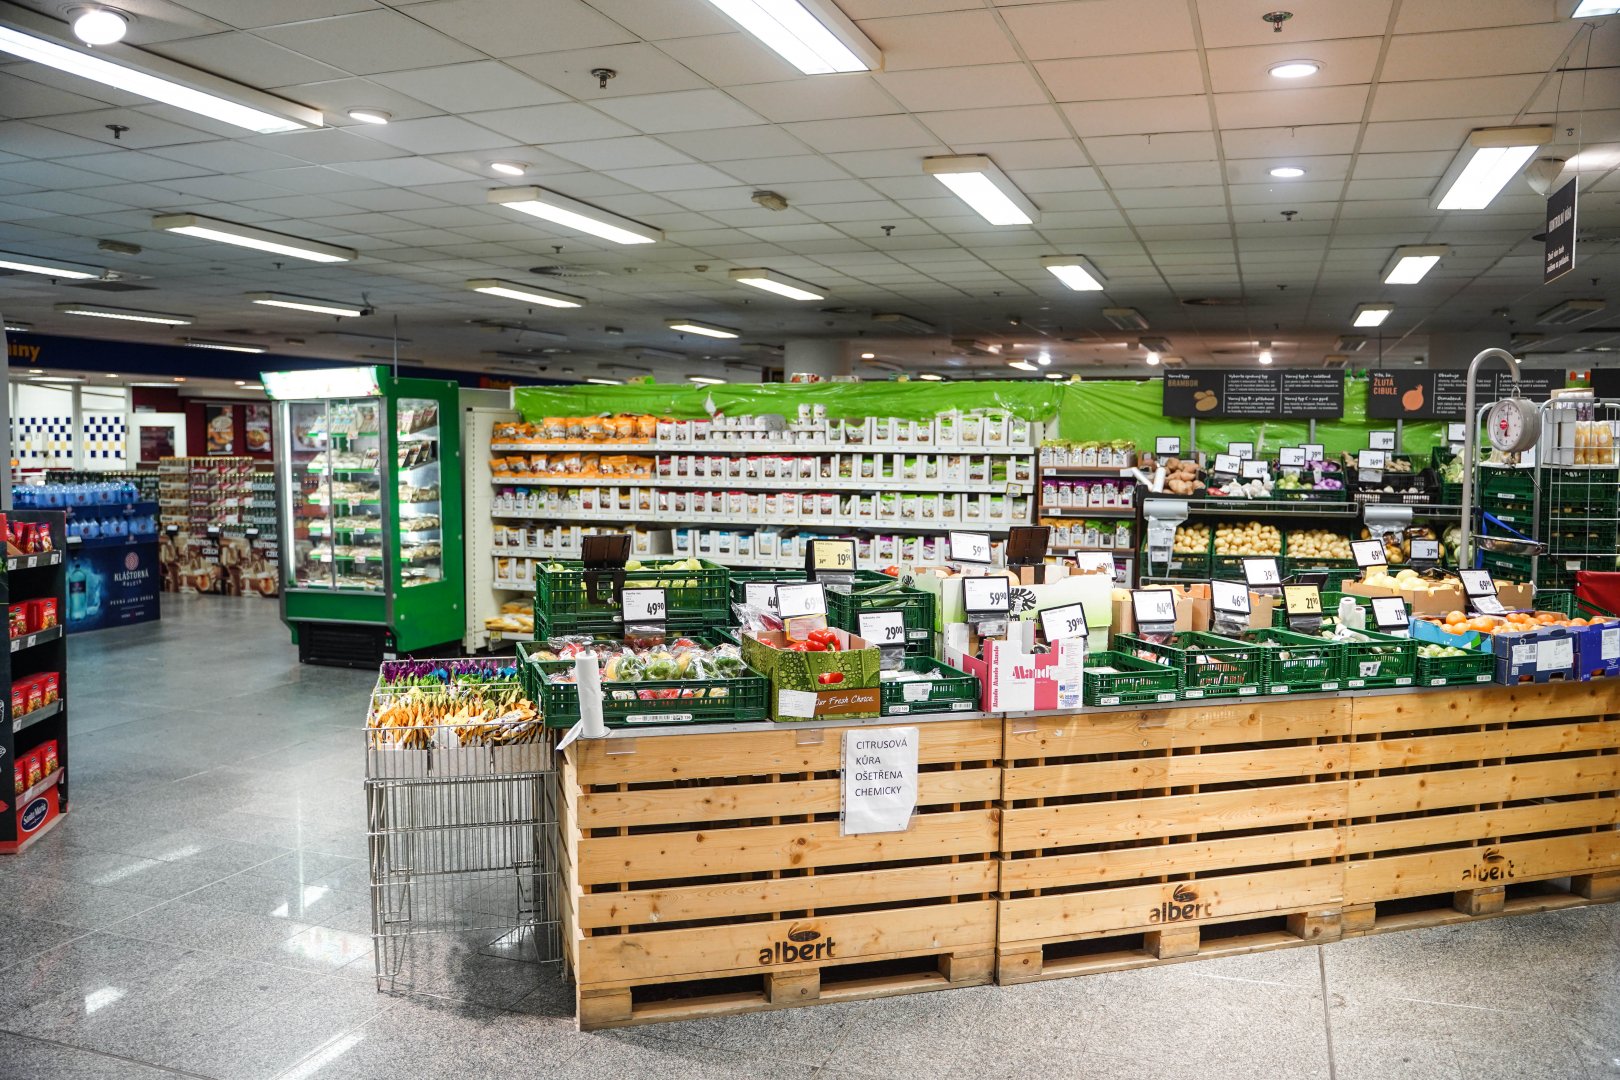 Albert supermarket